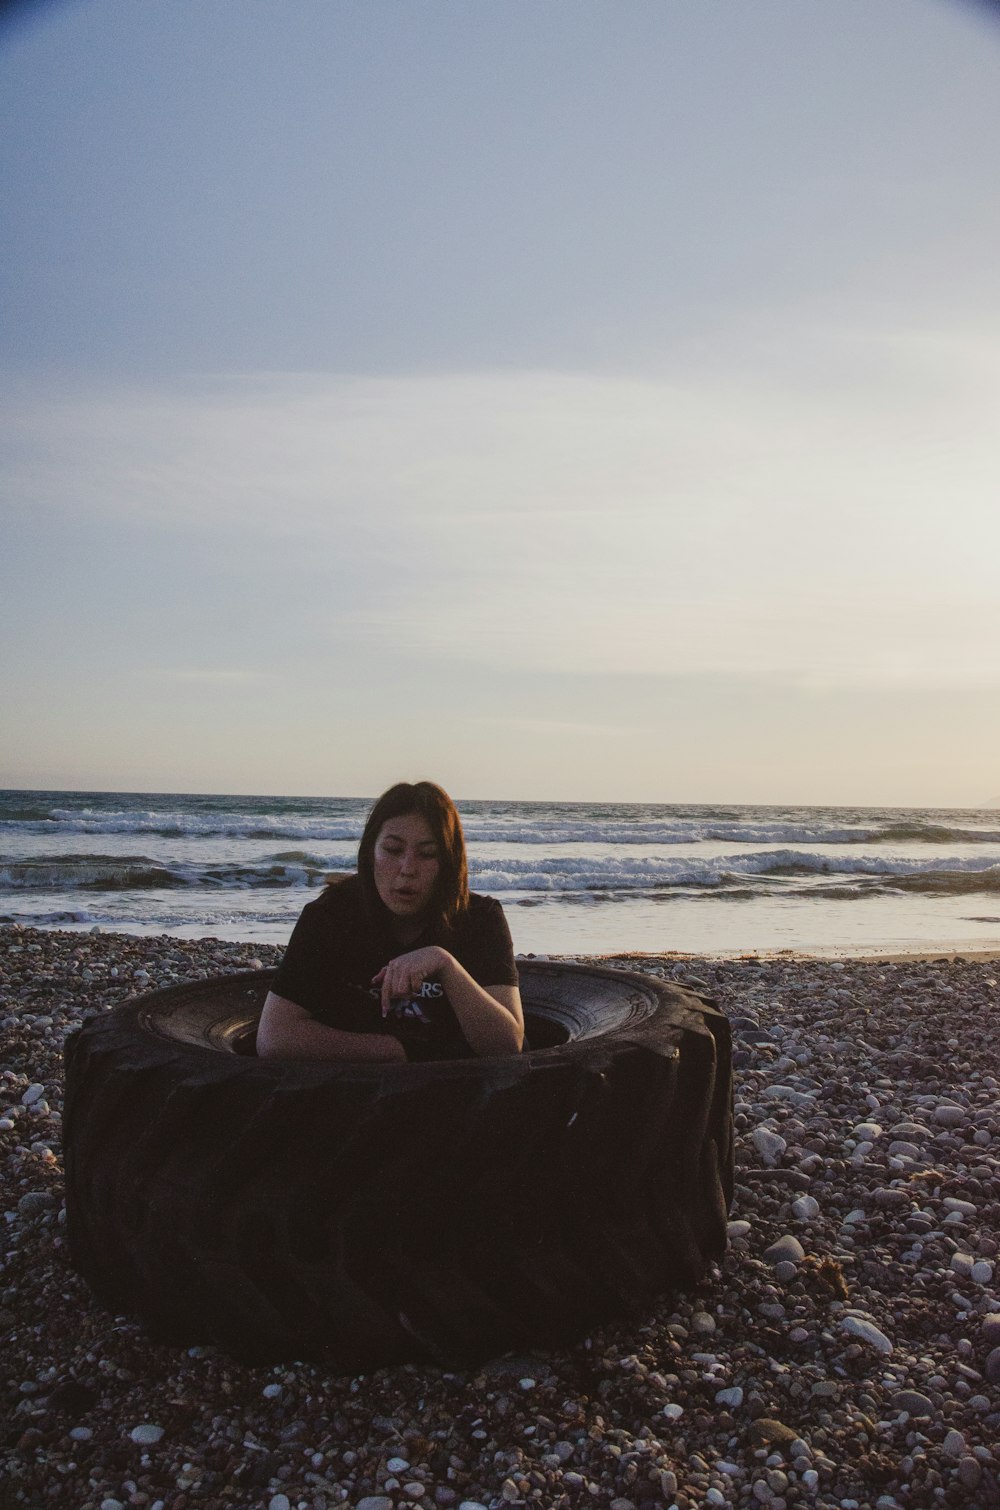 a woman is sitting on a bean bag chair on the beach